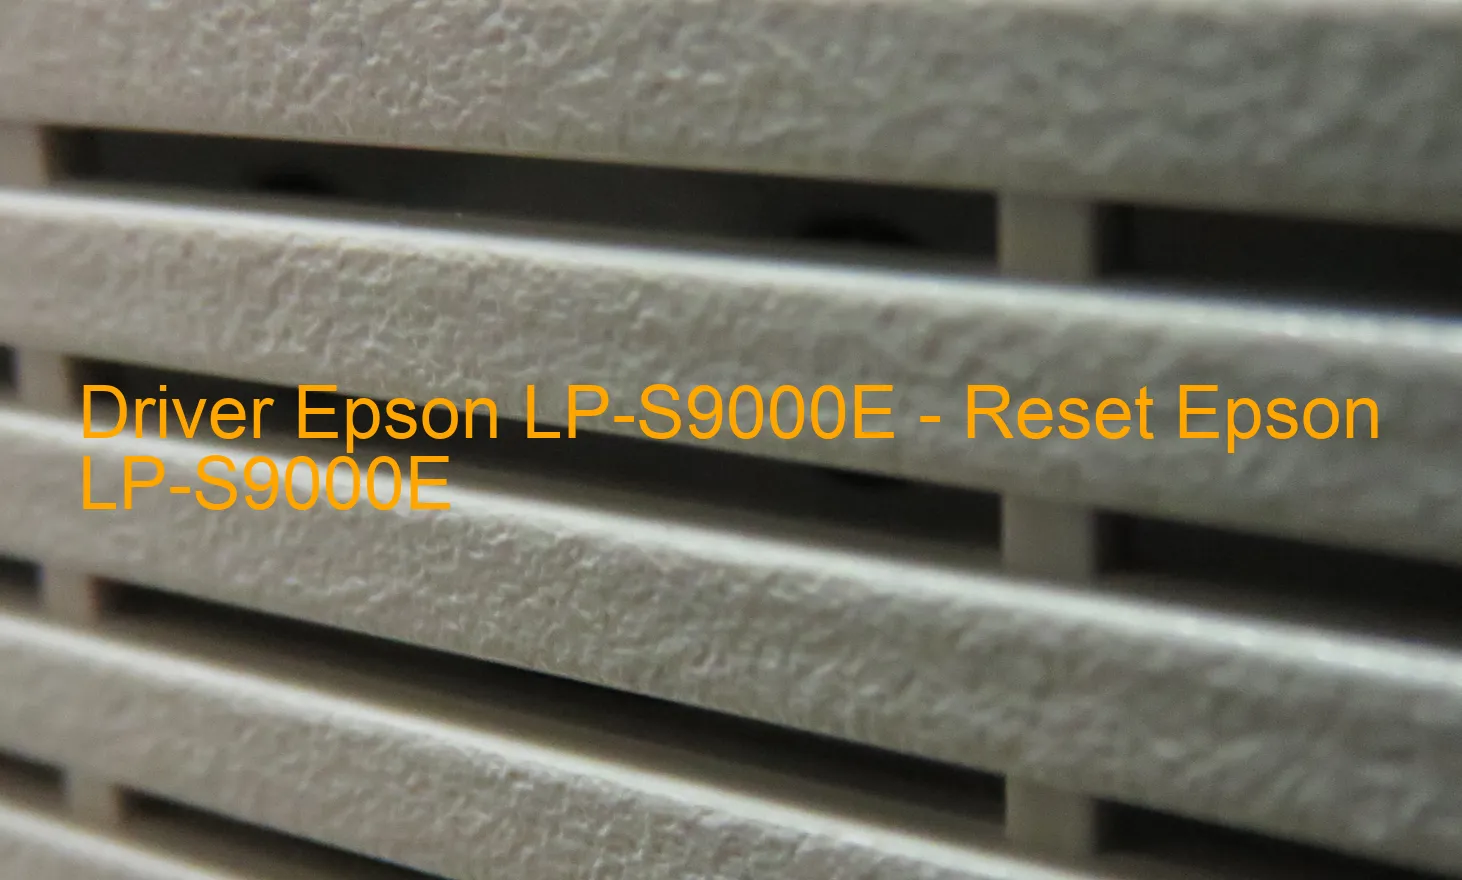 Epson LP-S9000Eのドライバー、Epson LP-S9000Eのリセットソフトウェア